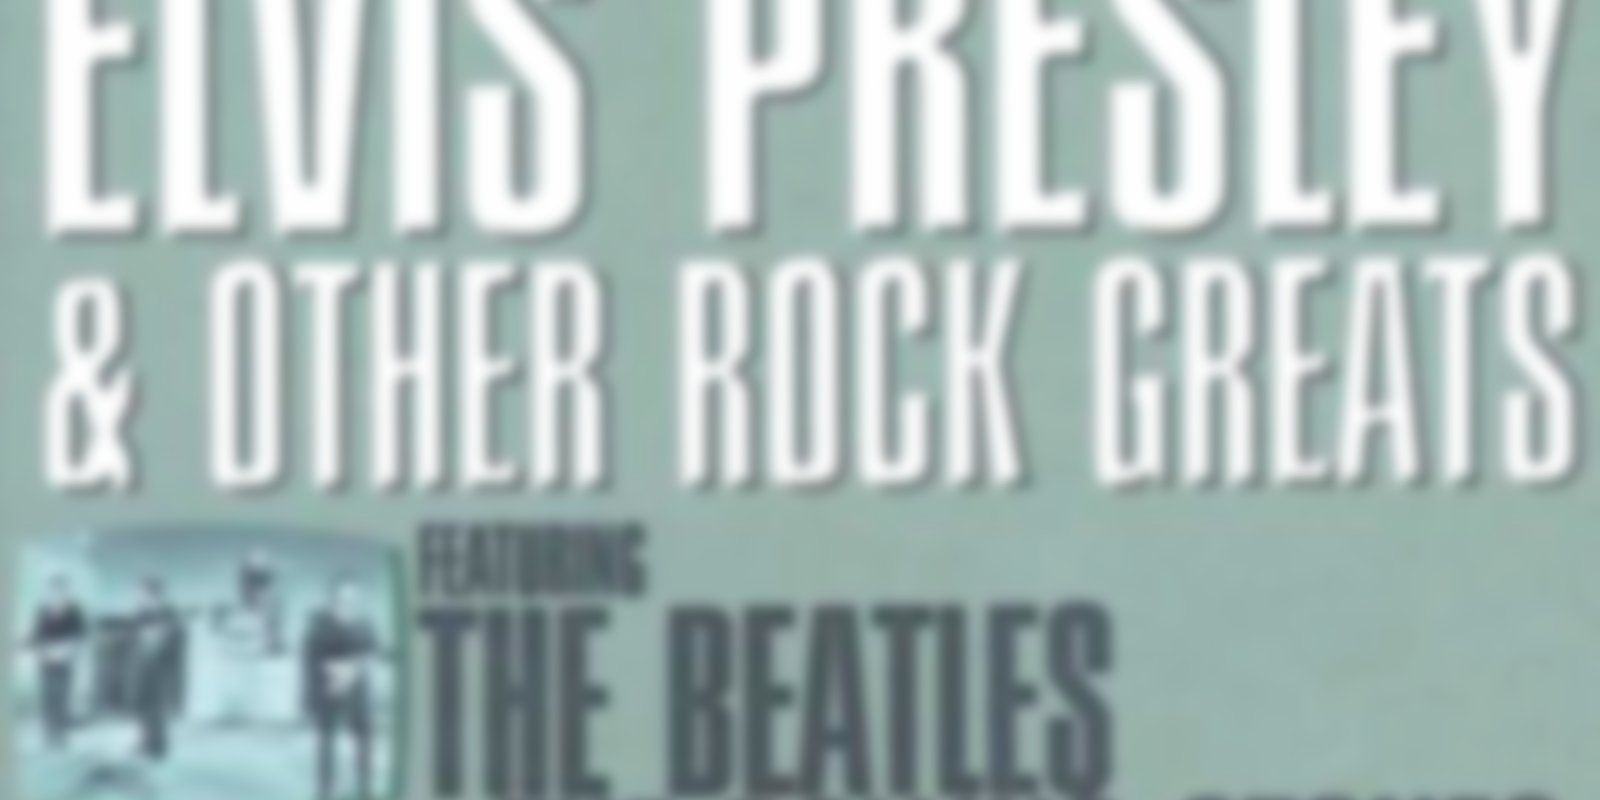 Ed Sullivan's Rock'n'Roll Classics - Elvis Presley & Other Rock Greats